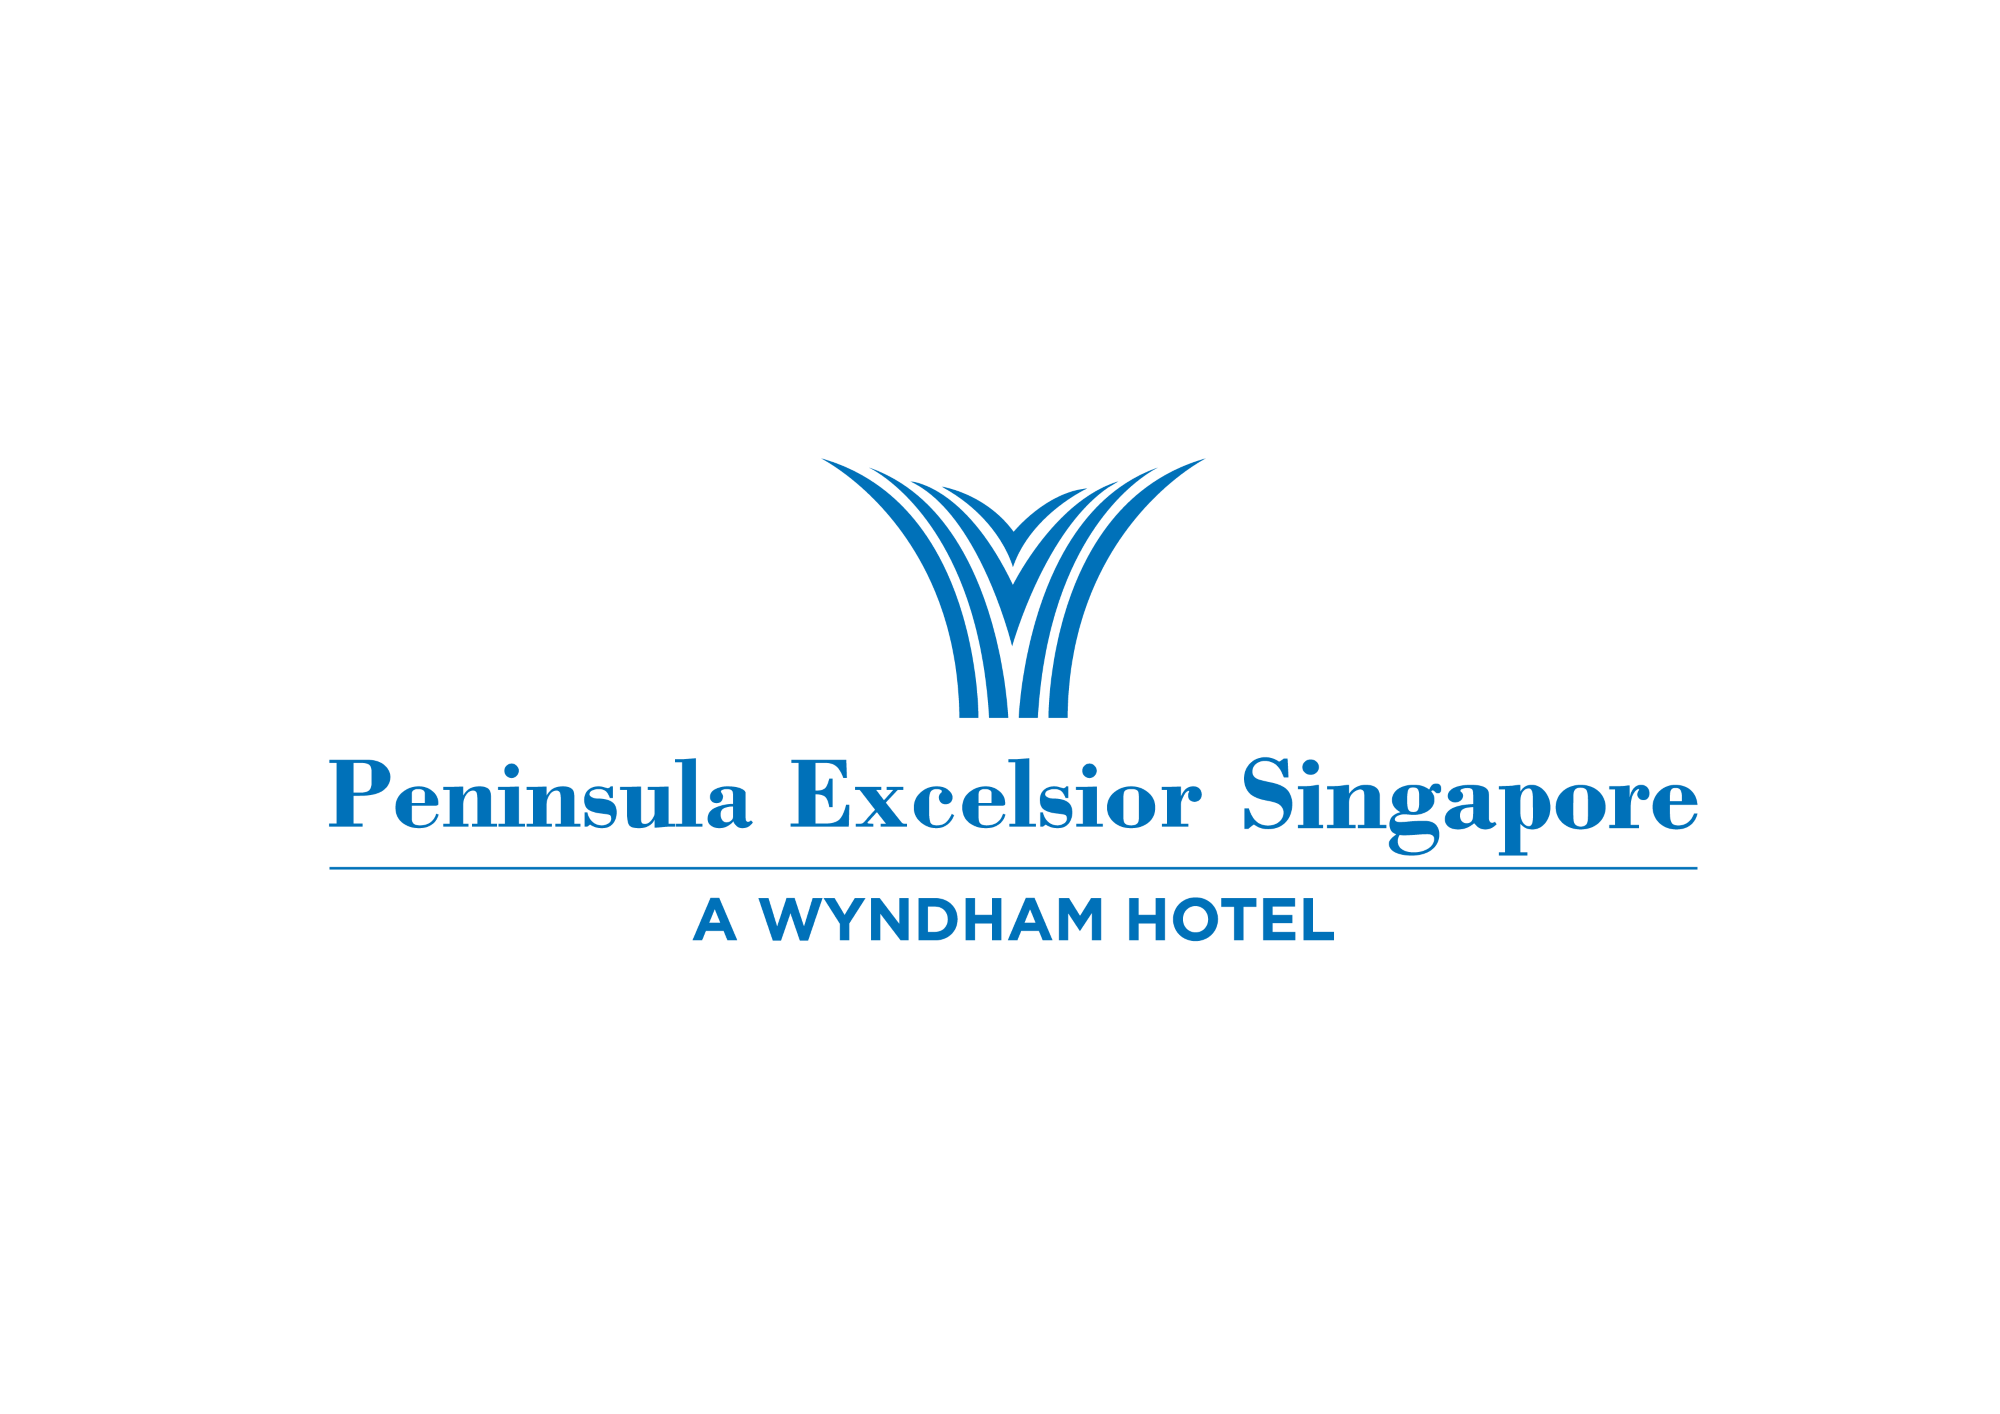 Peninsula Excelsior Singapore, A Wyndham Hotel company logo